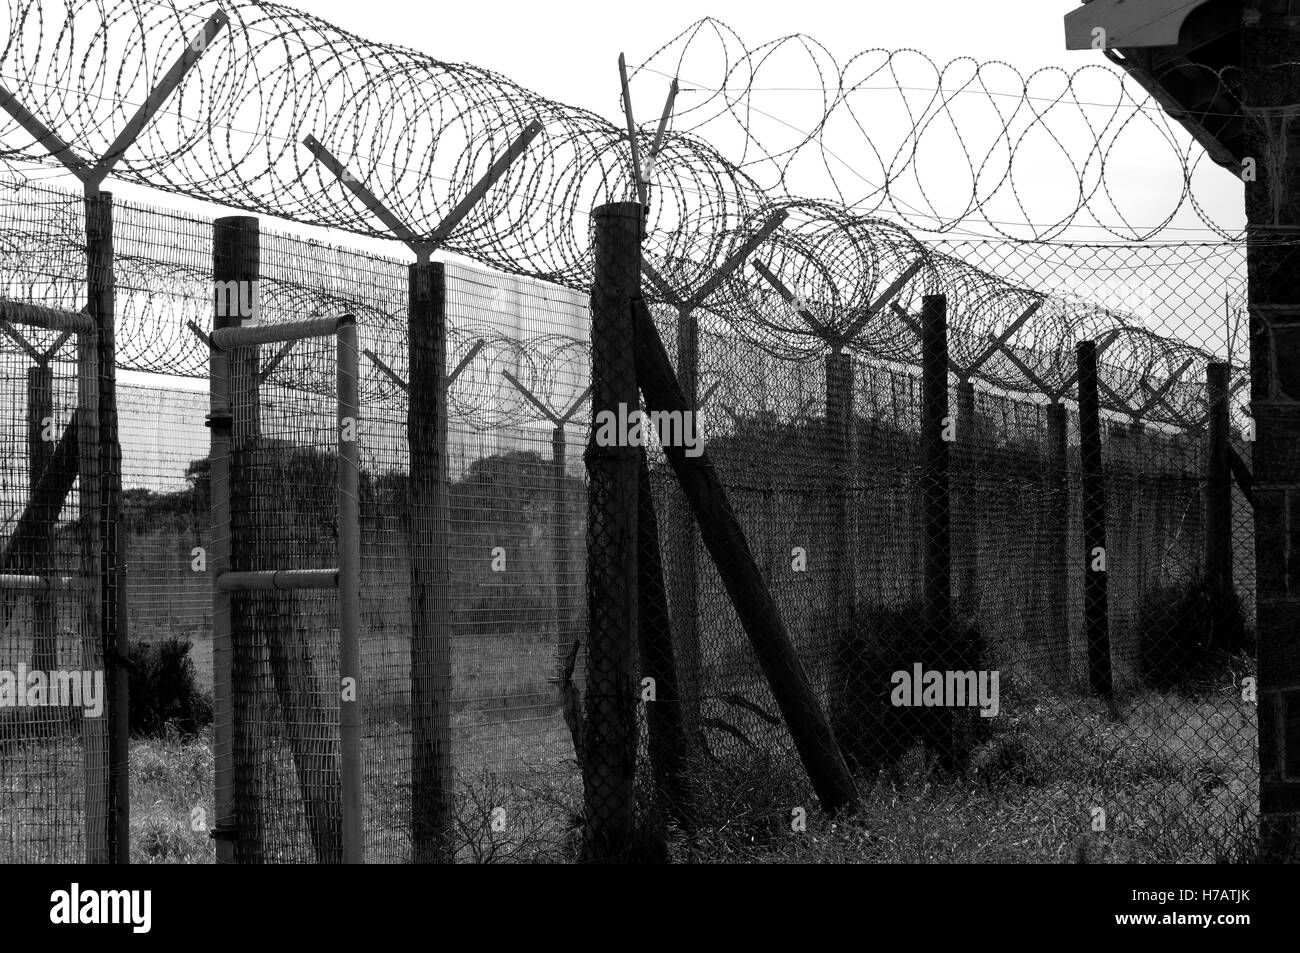 Prison perimeter fencing Stock Photo - Alamy